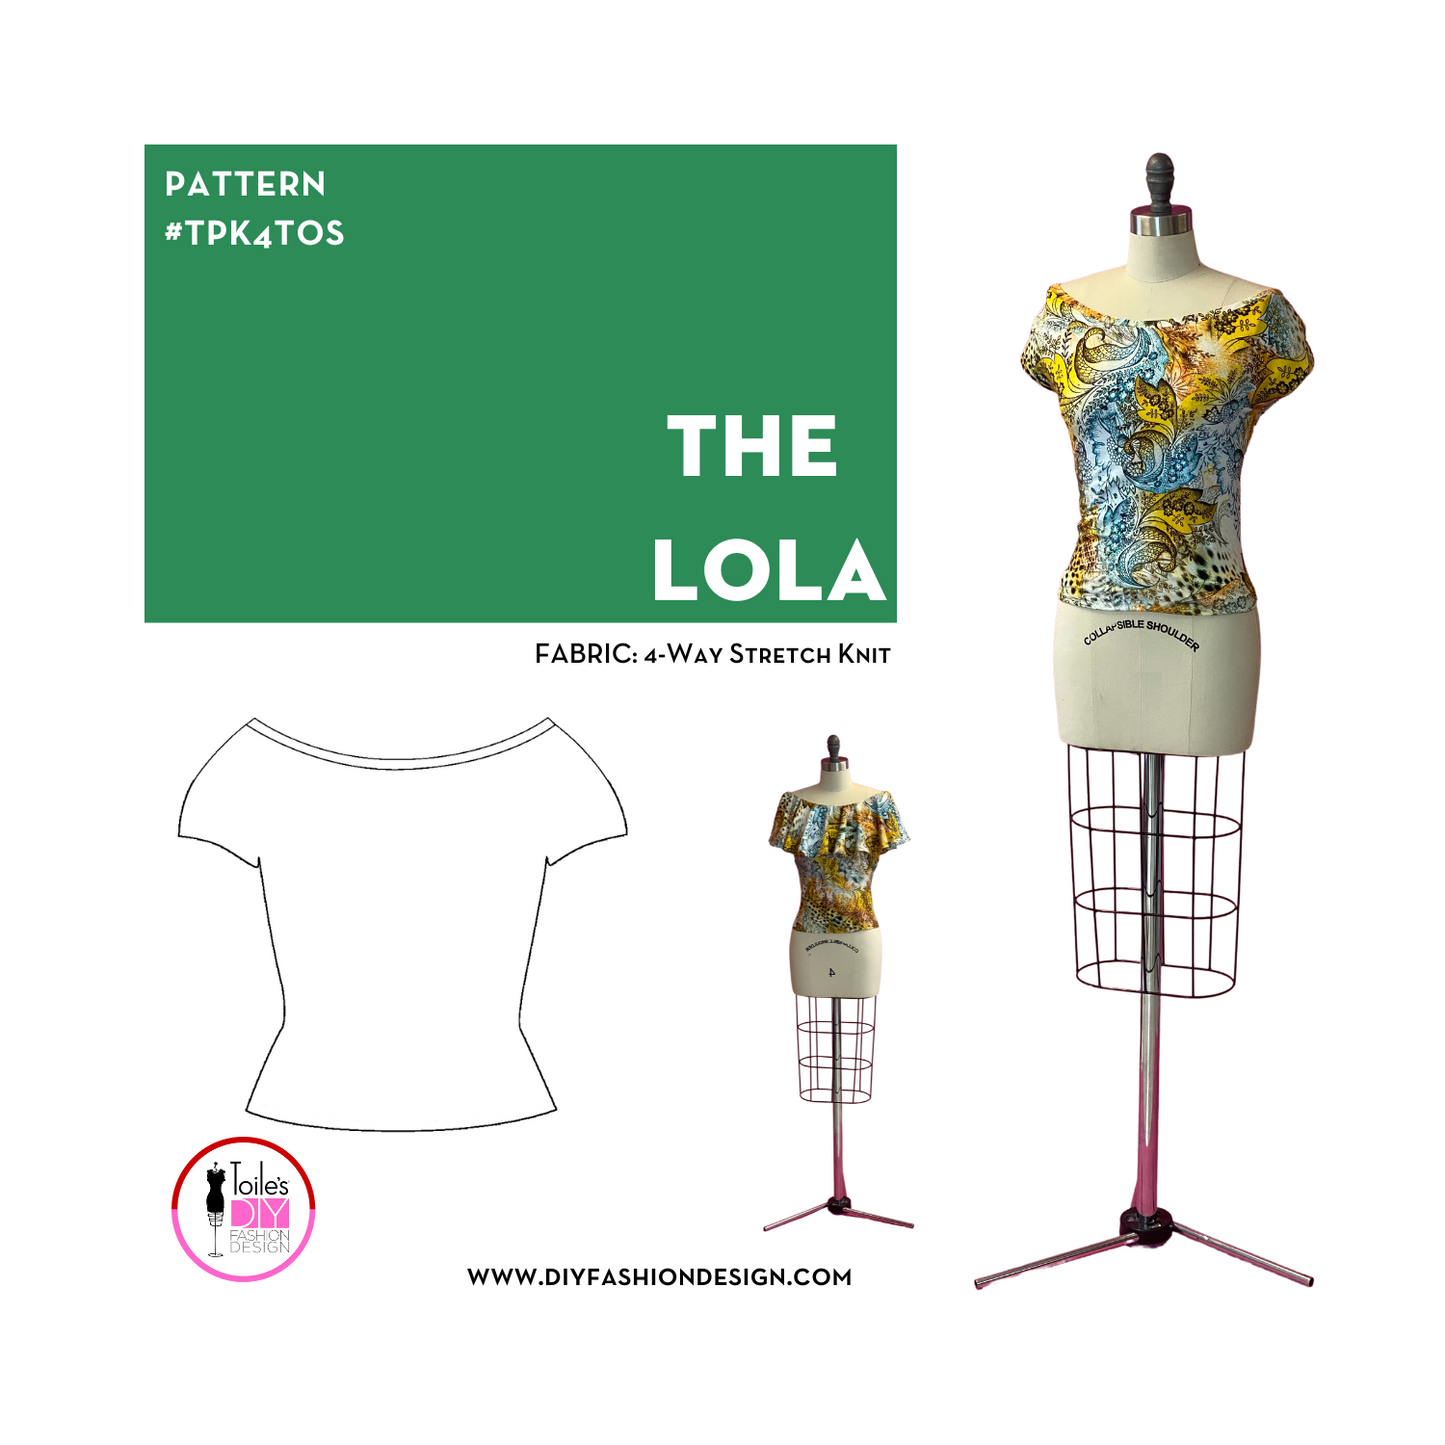 The Lola